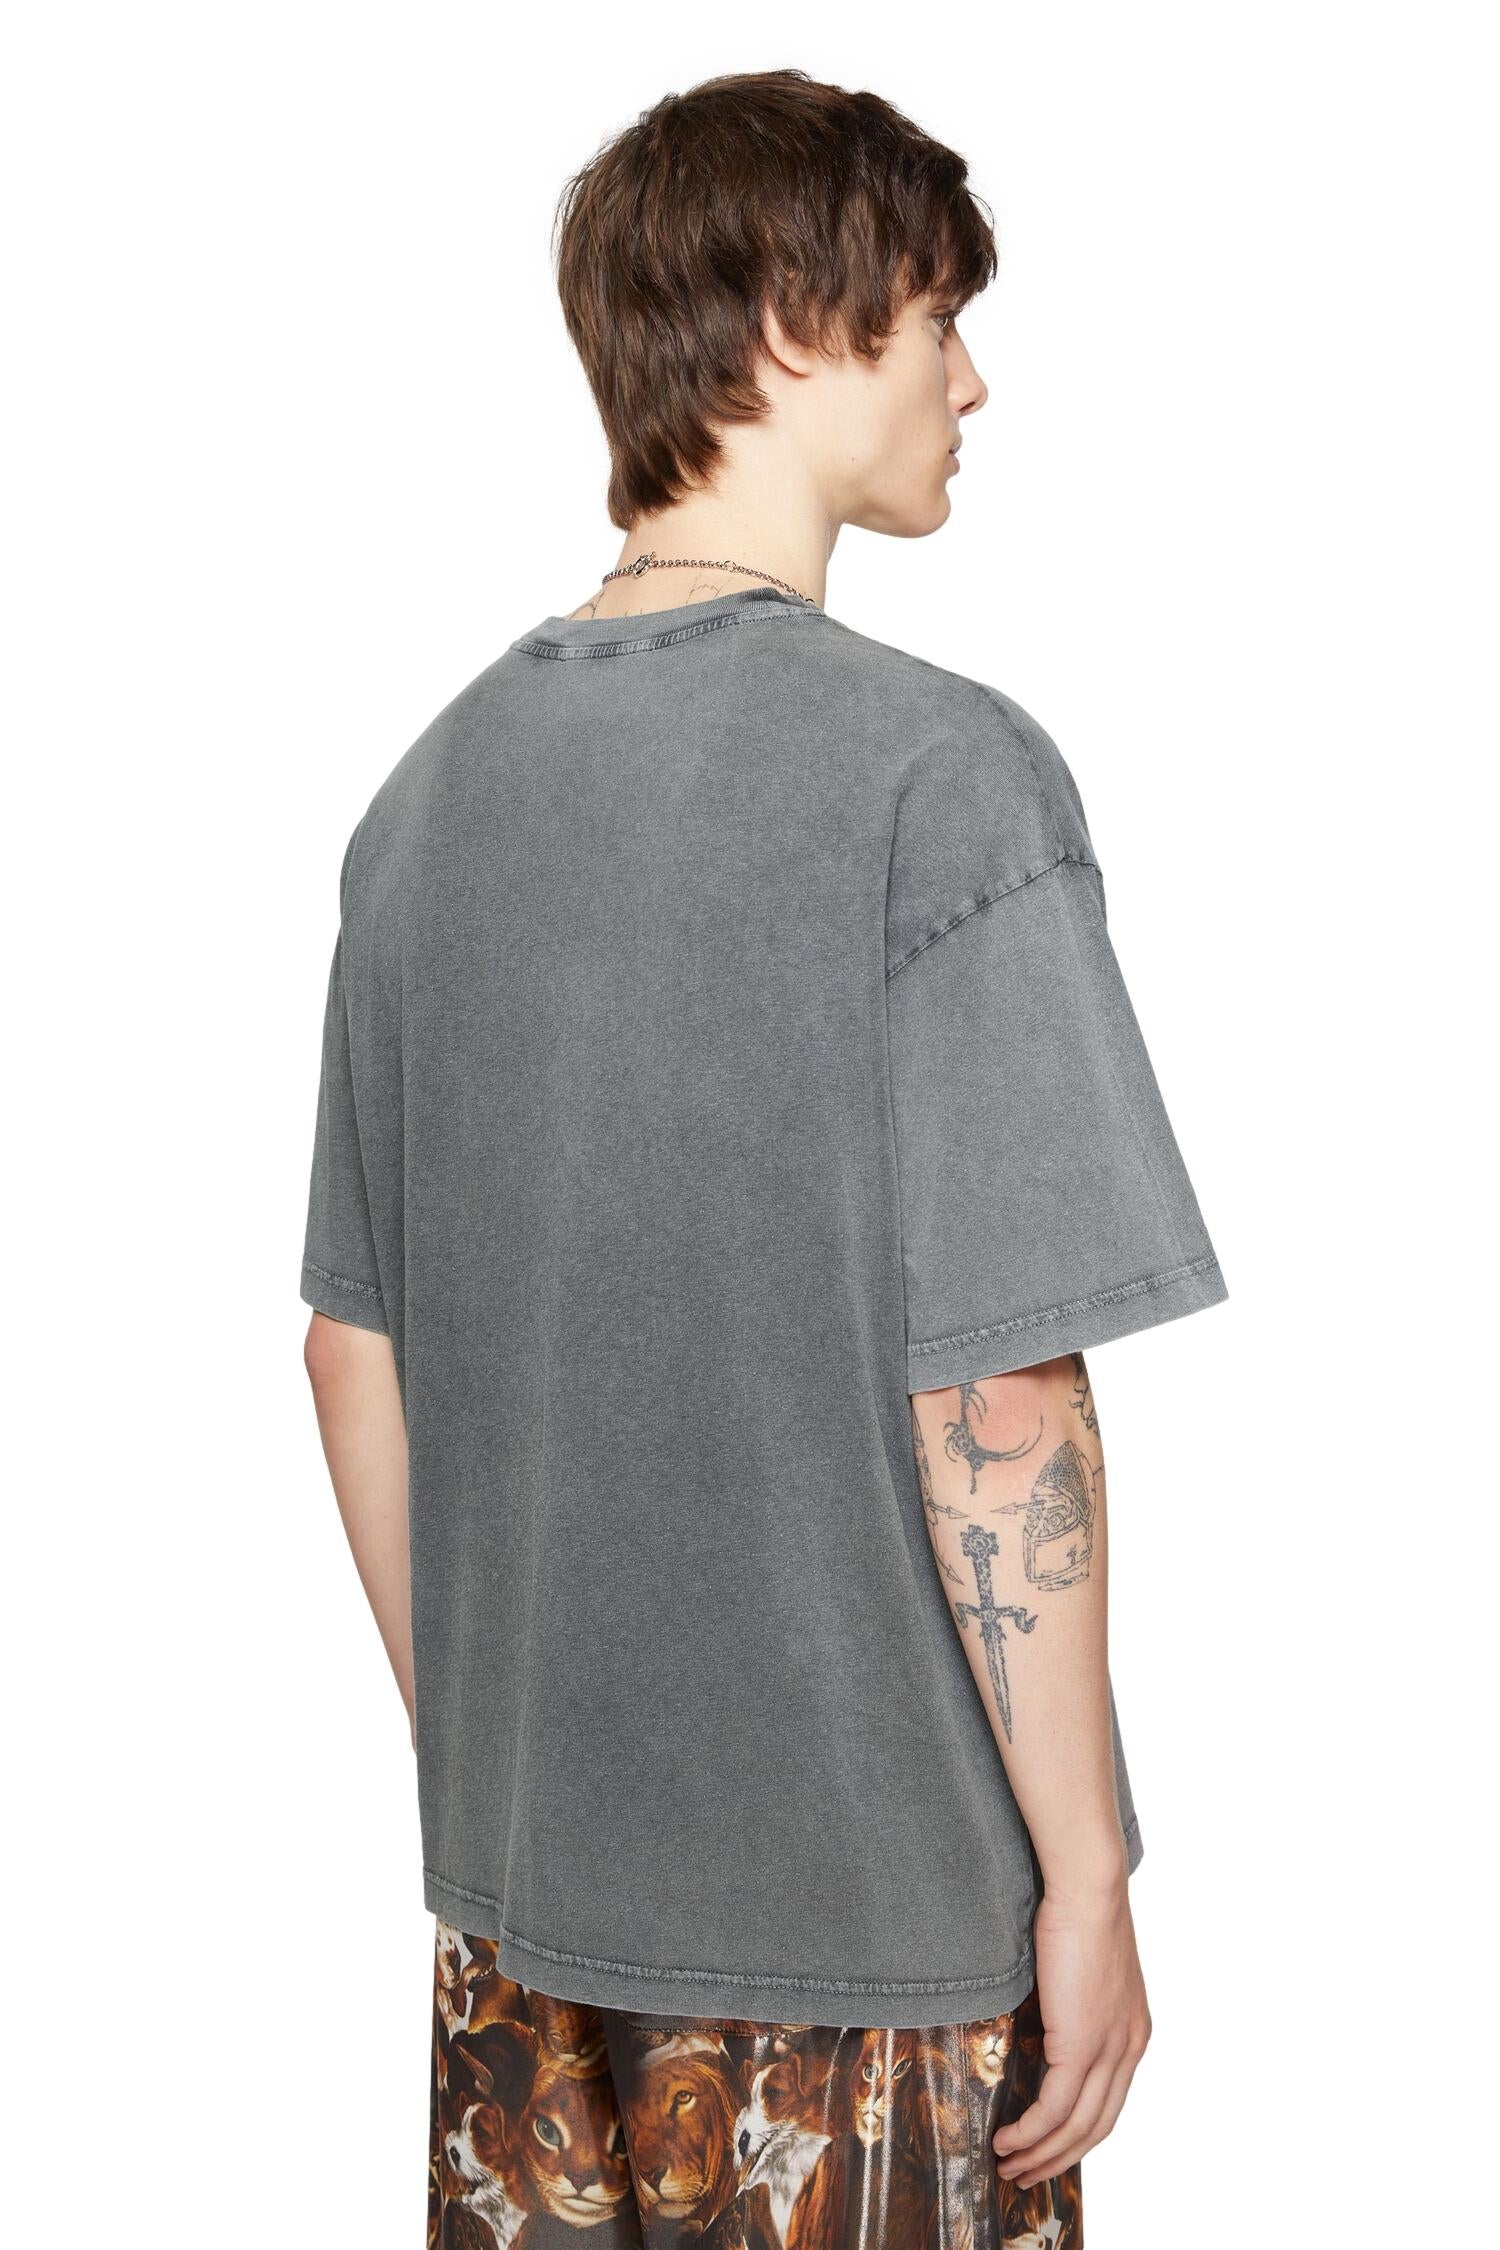 Acne Oversized Printed Tee T-shirt Vasket Sort - [shop.name]